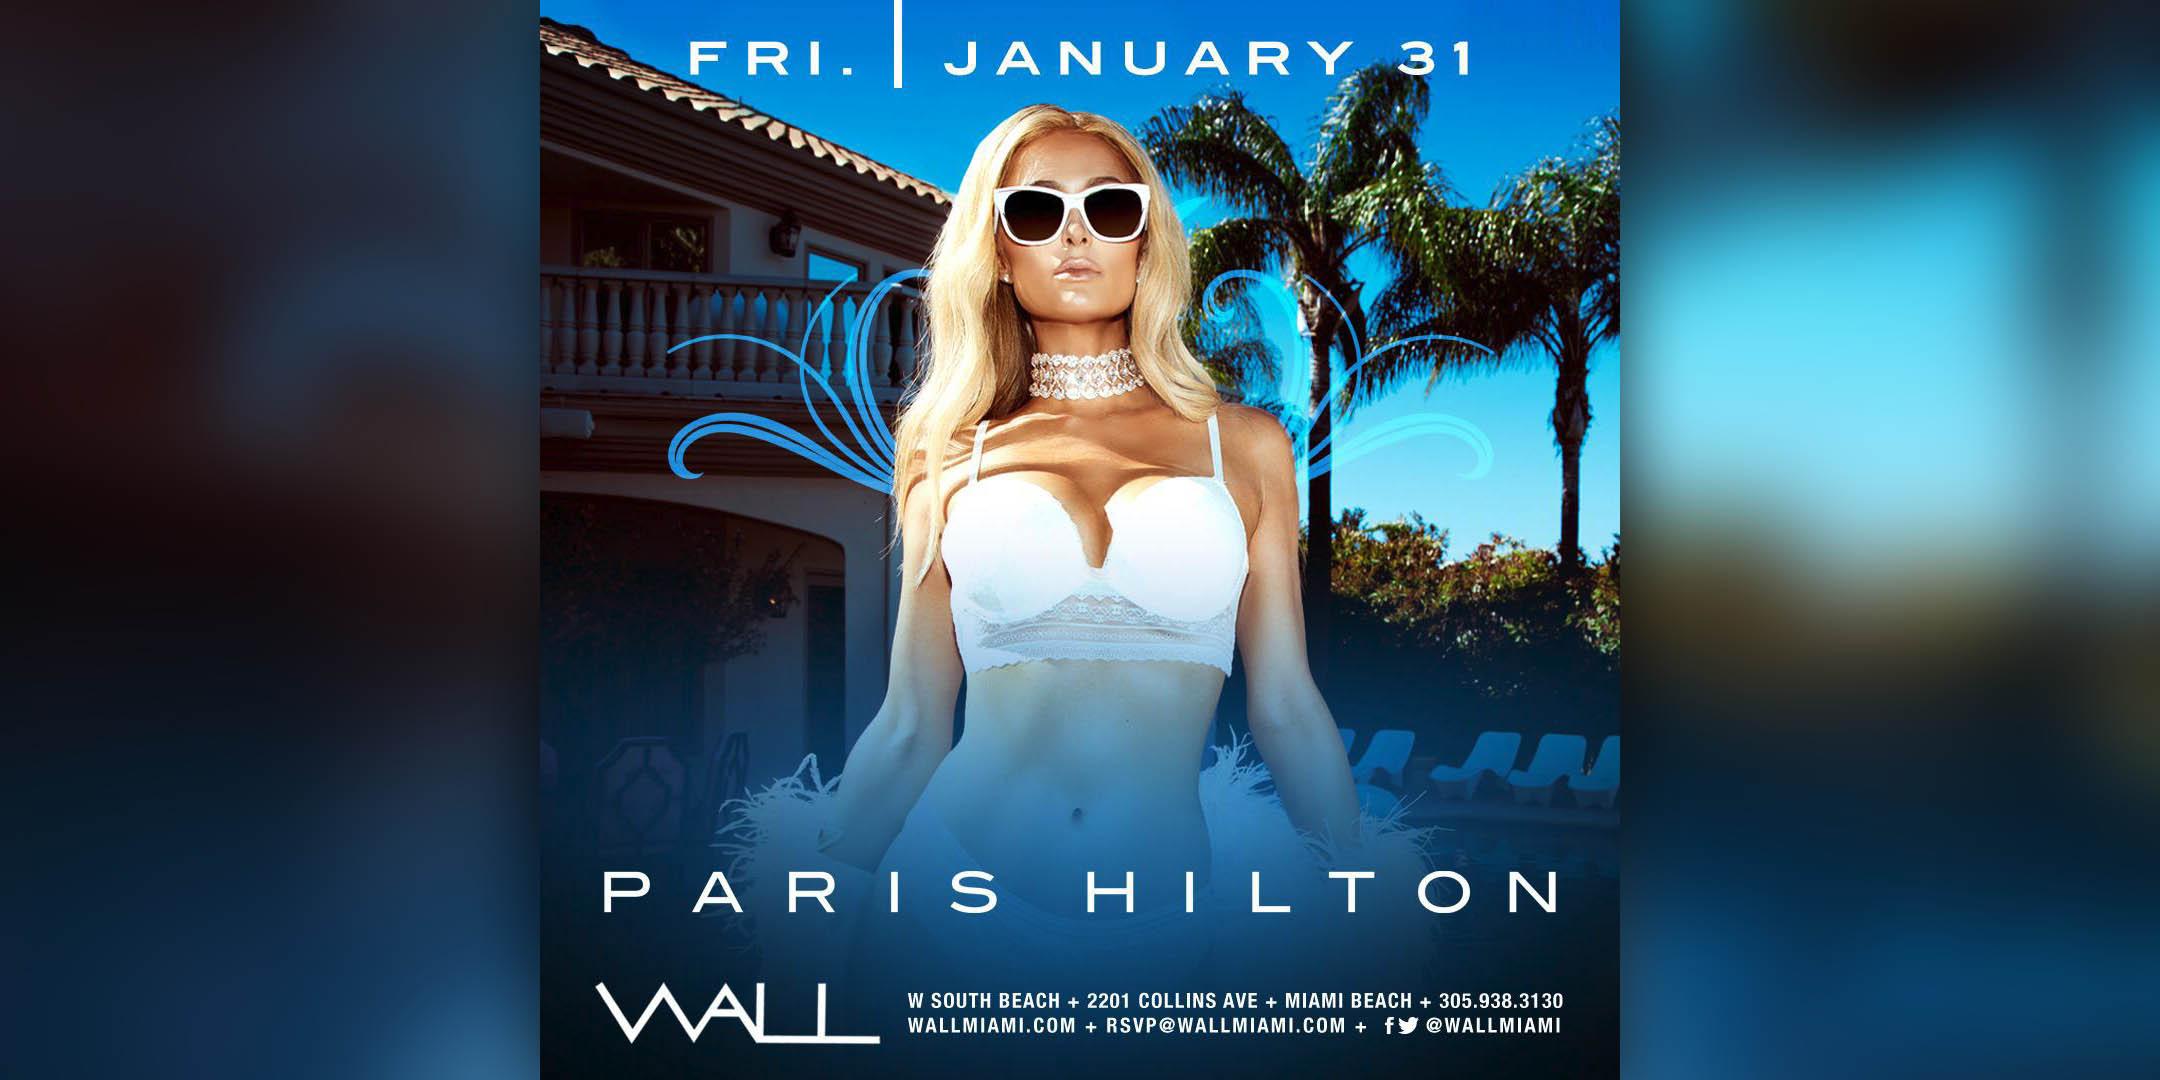 Paris Hilton @ Wall Lounge Friday January 31st